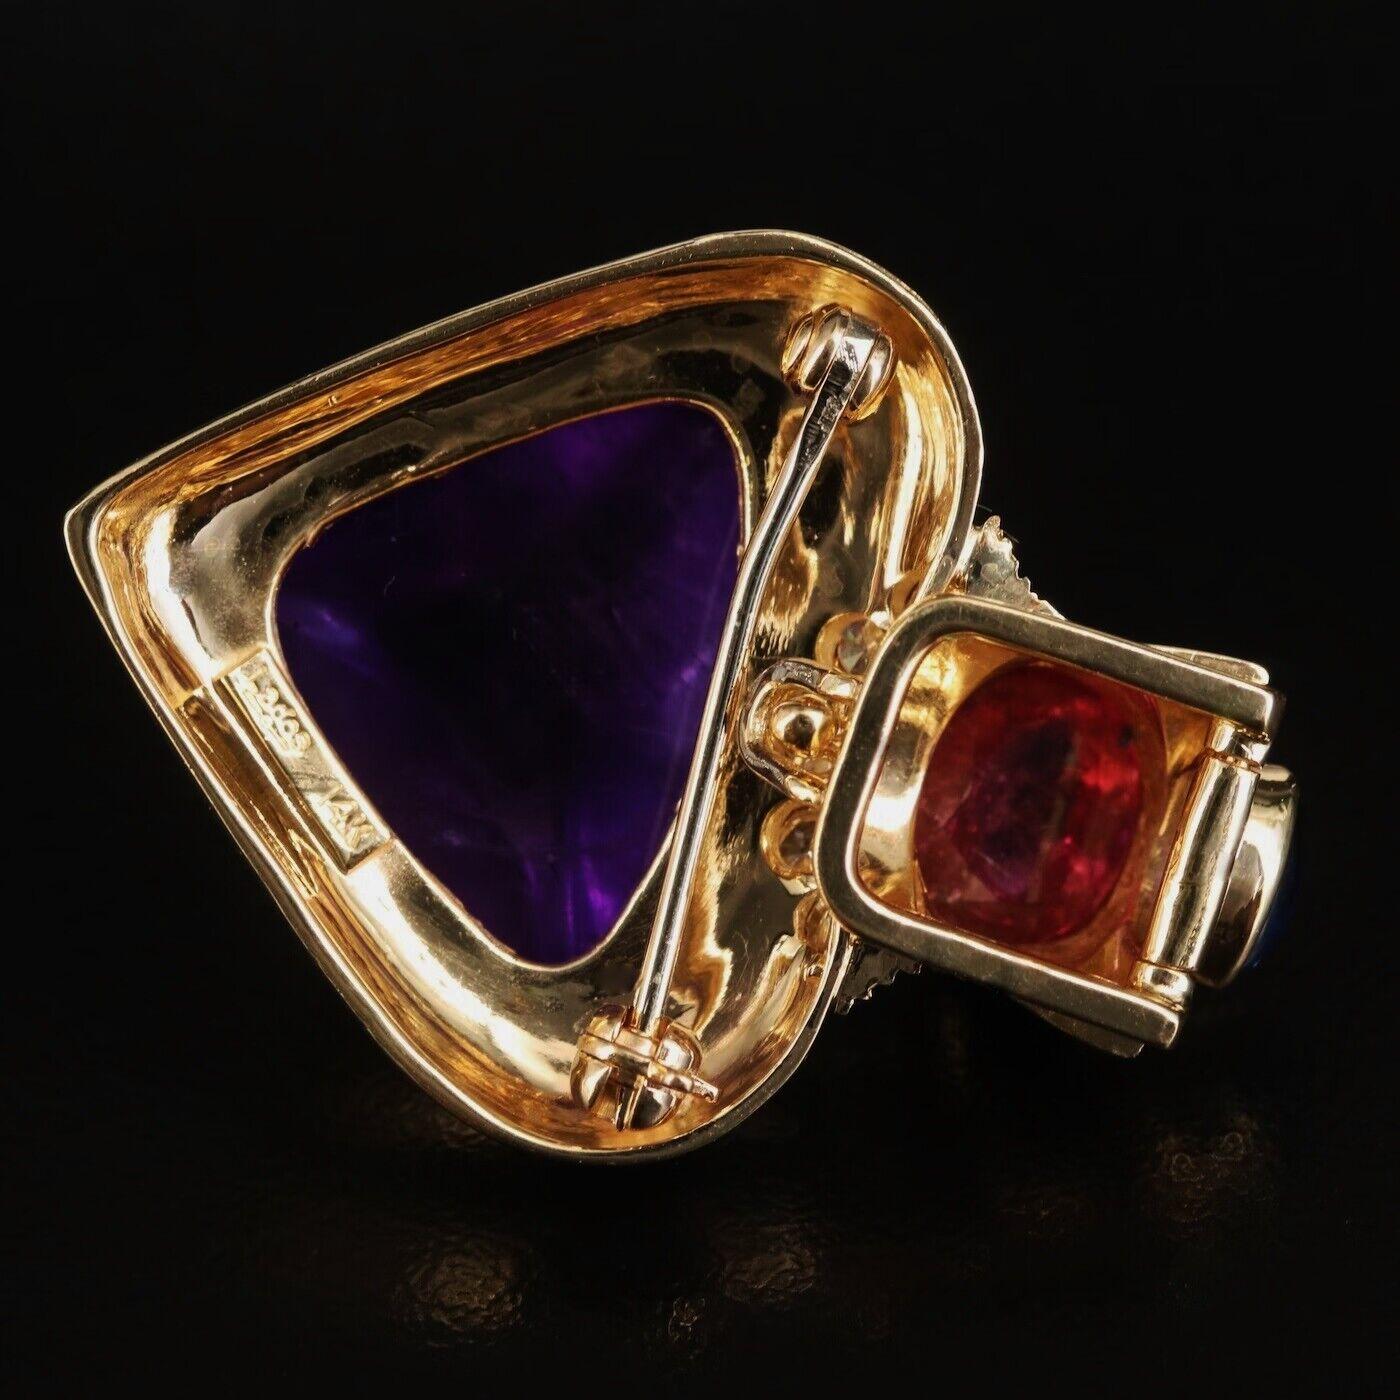 $12500 / Lagos Heart Pendant Brooch /Massive Diamond & Gemstone / 14K 2